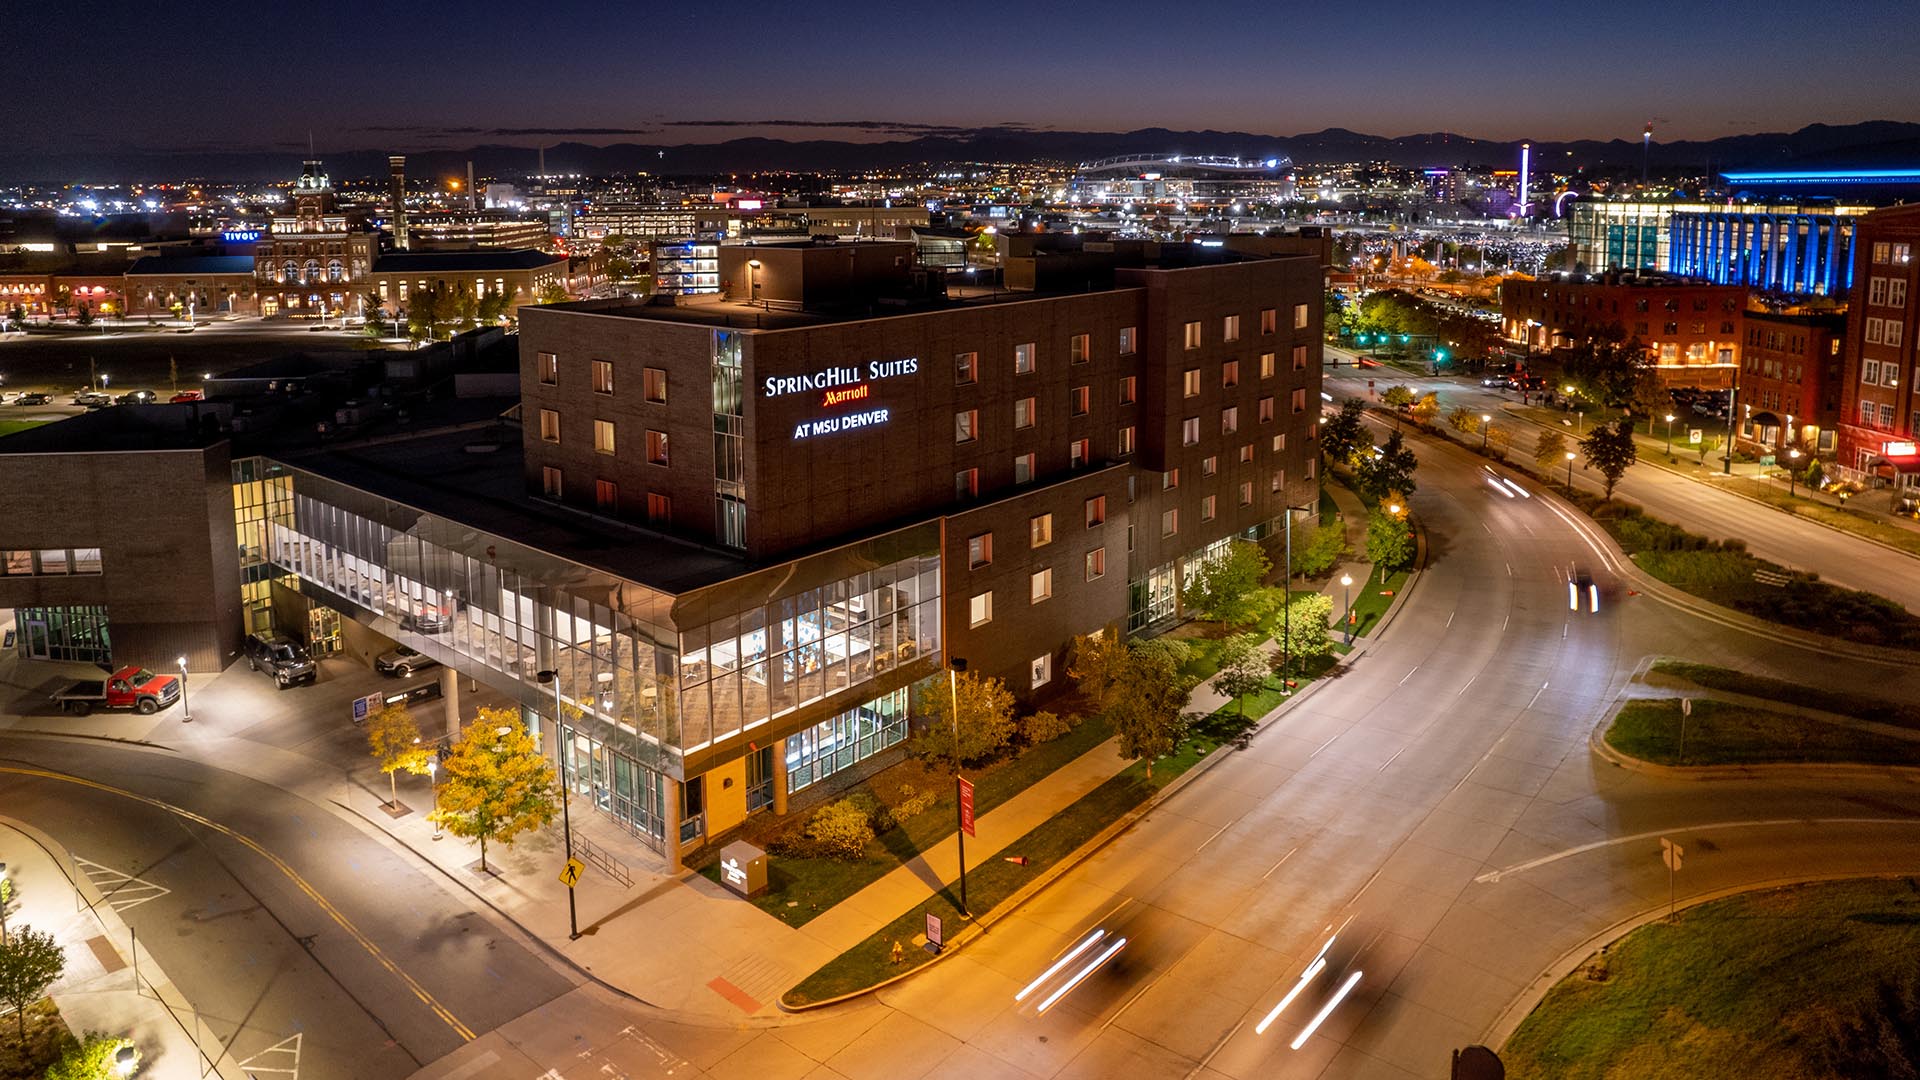 Night time shot of SpringHill Suites Marriott hotel at MSU Denver